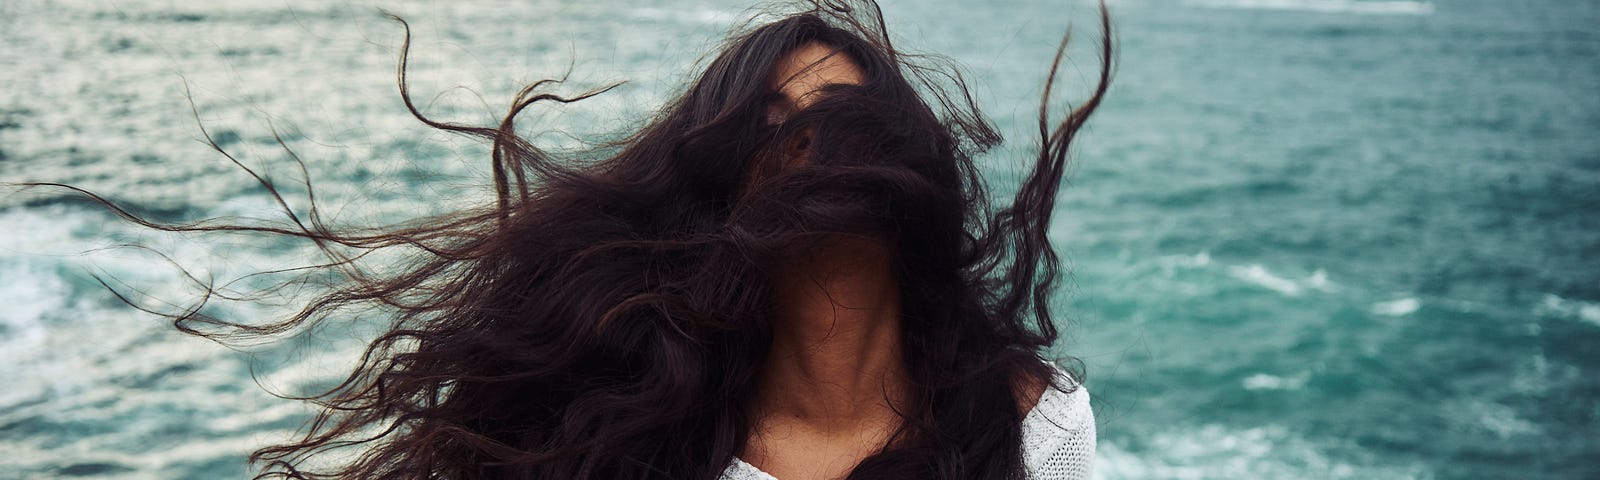 A woman wait long, brunette, wind-blown hair